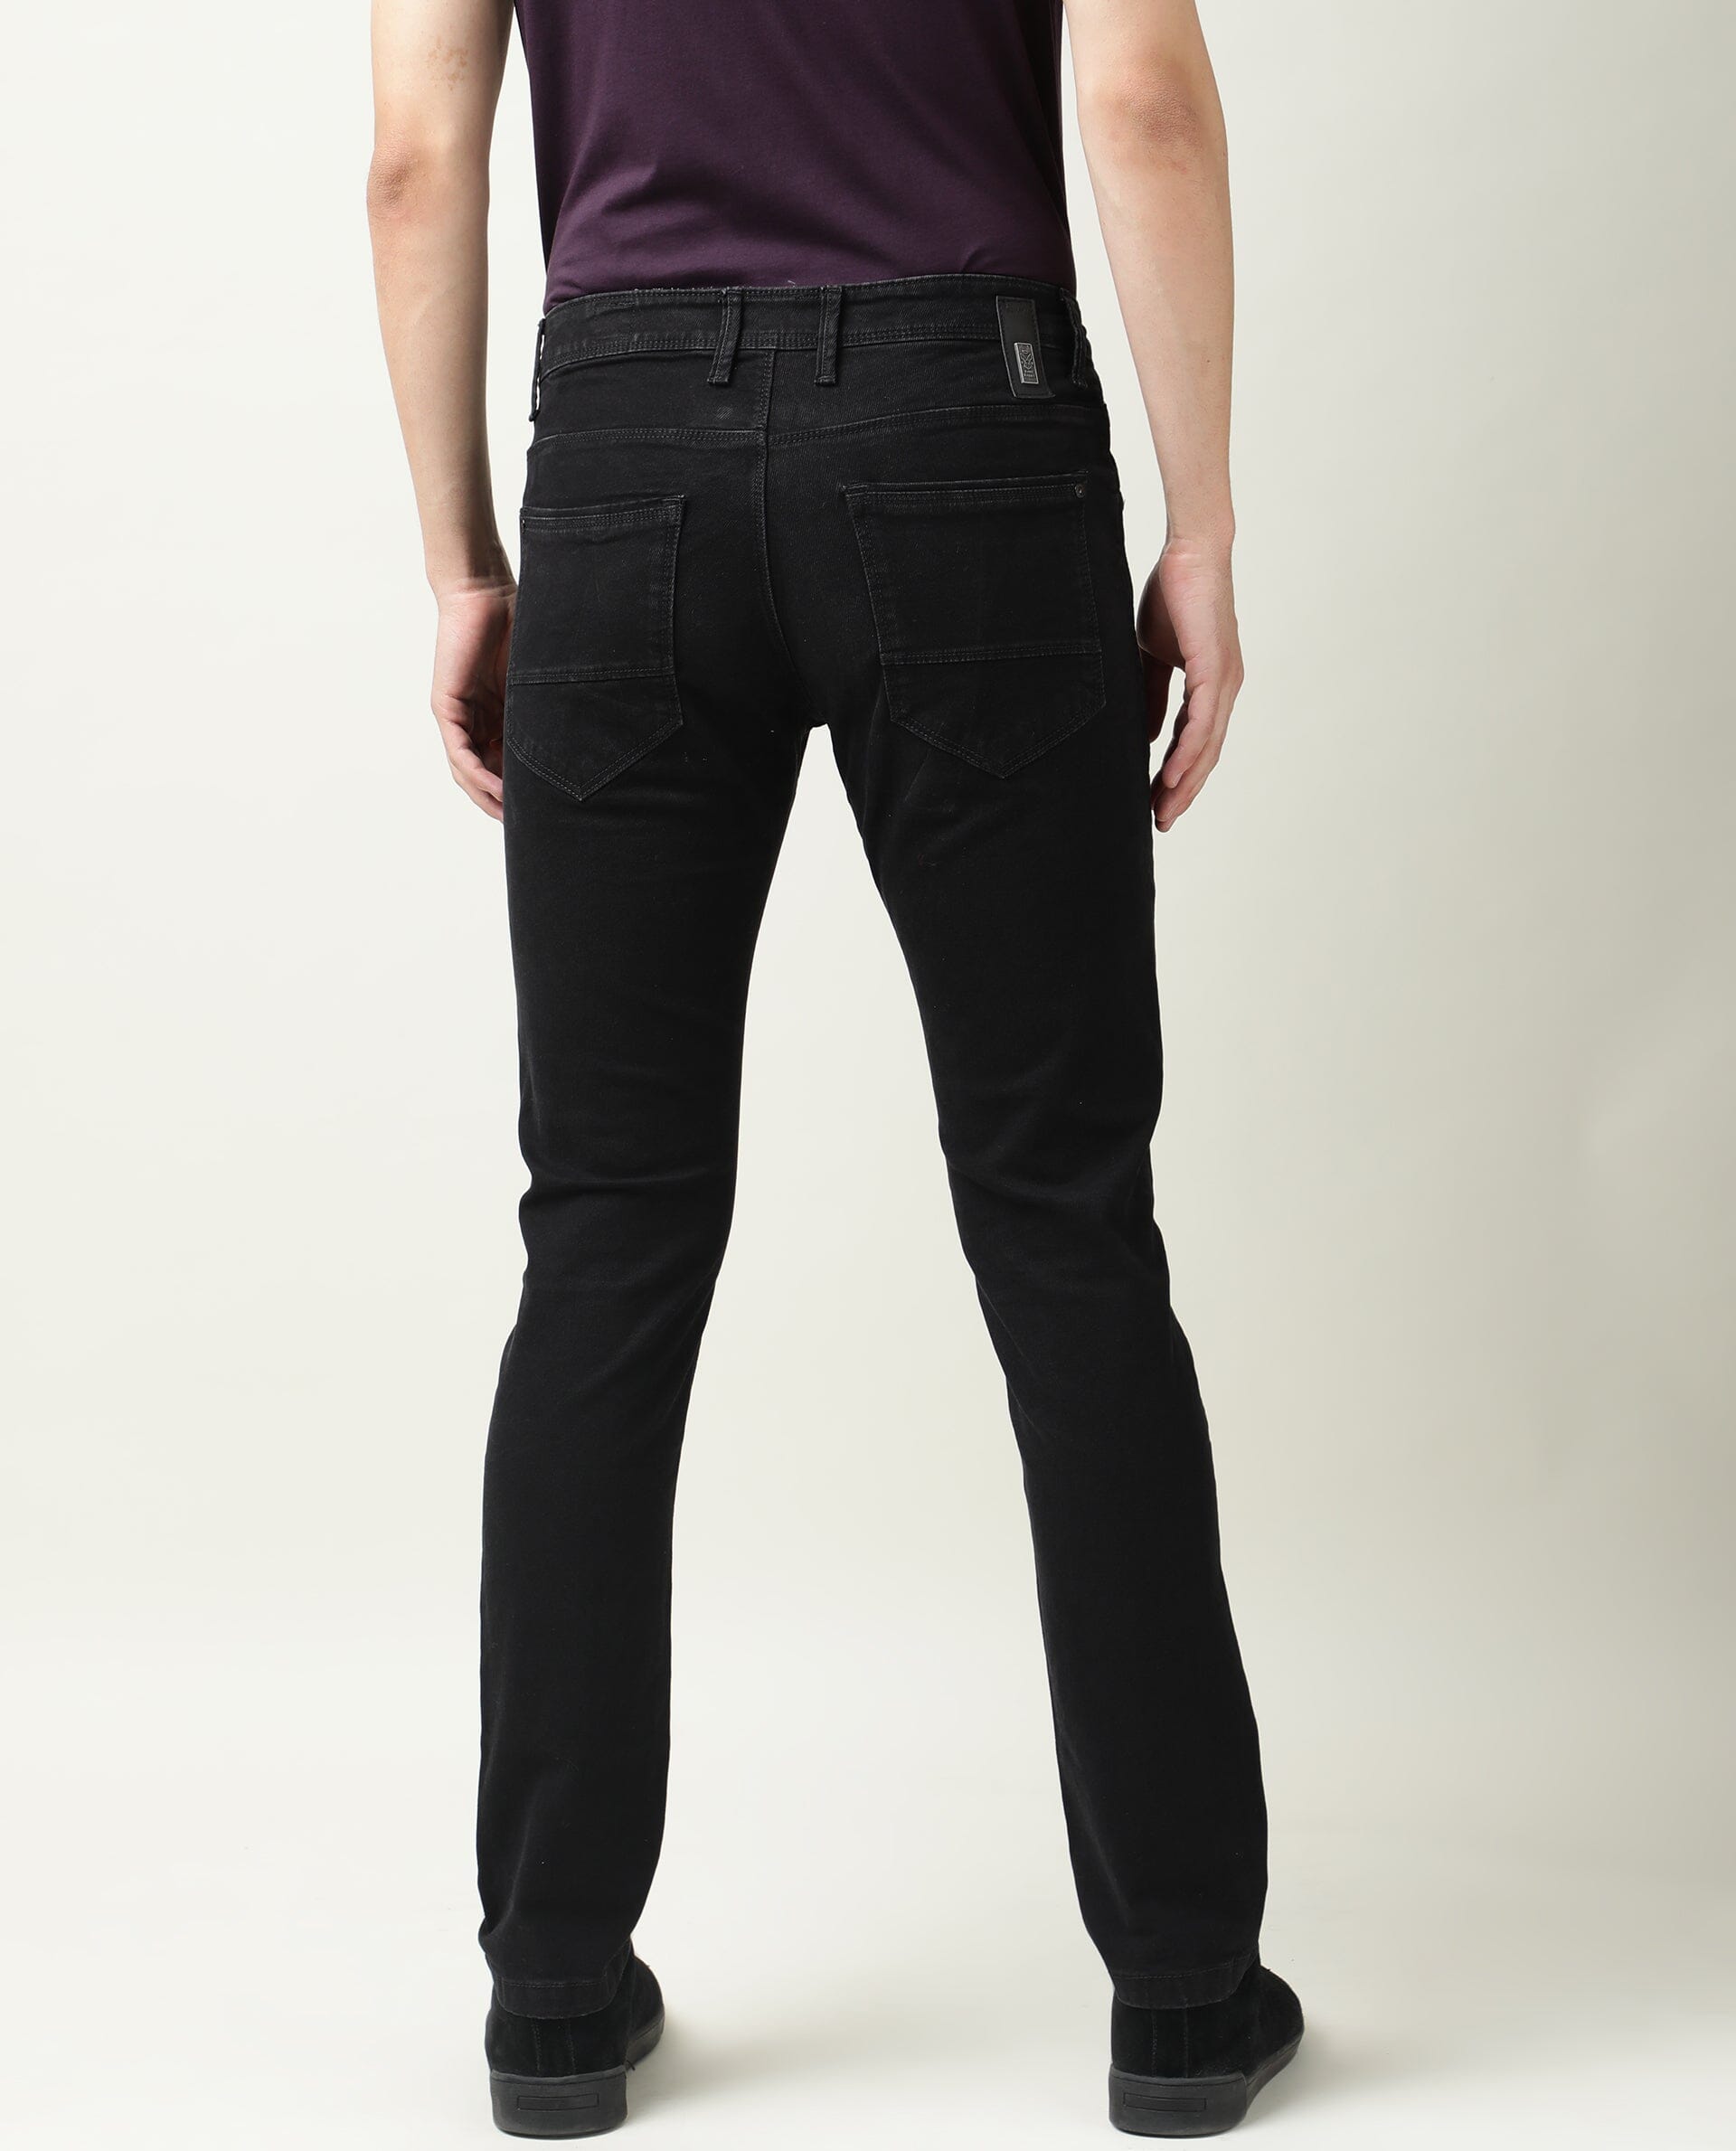 Loose Jeans - Black - Men | H&M IN